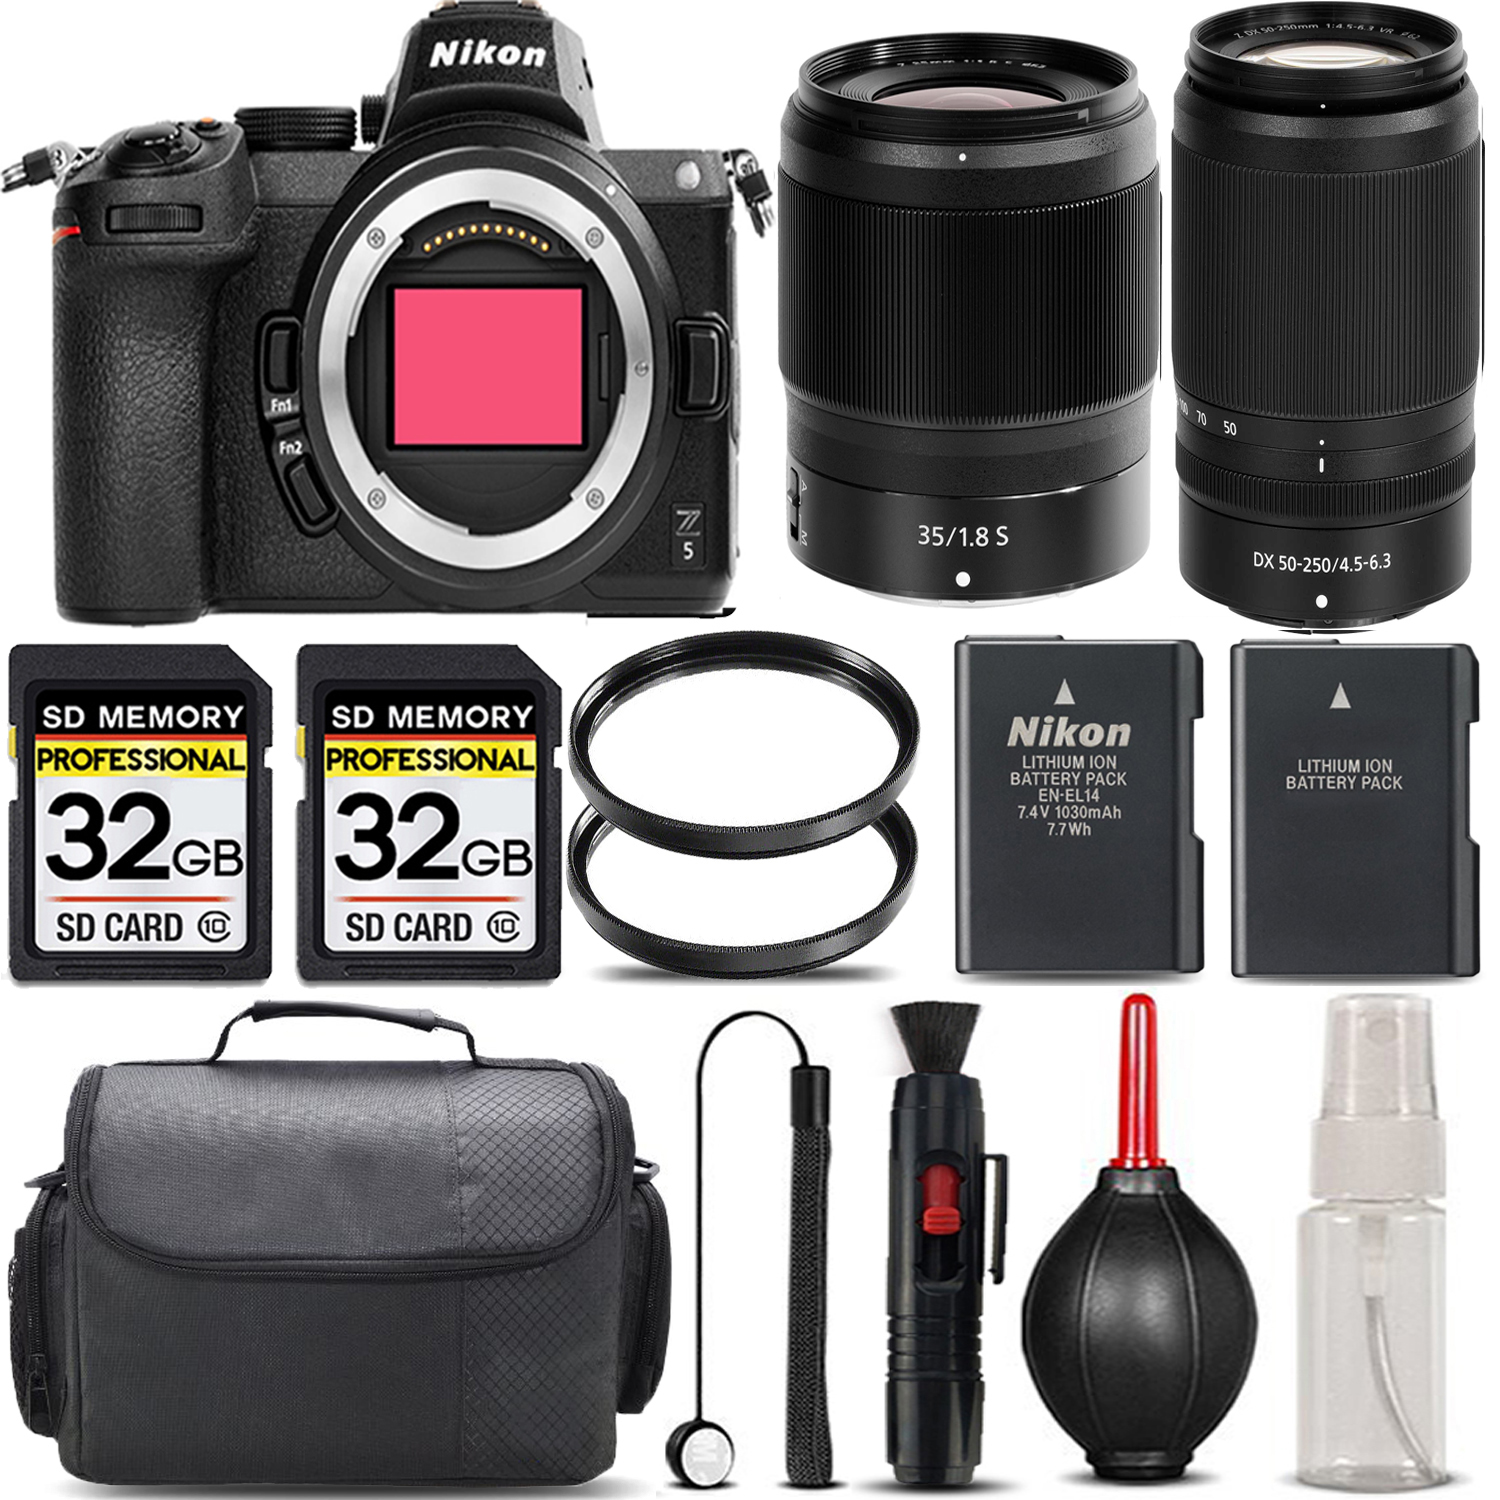 Z5 Camera + 50-250mm f/4.5-6.3 Lens + 35mm S Lens + Handbag - SAVE BIG KIT *FREE SHIPPING*